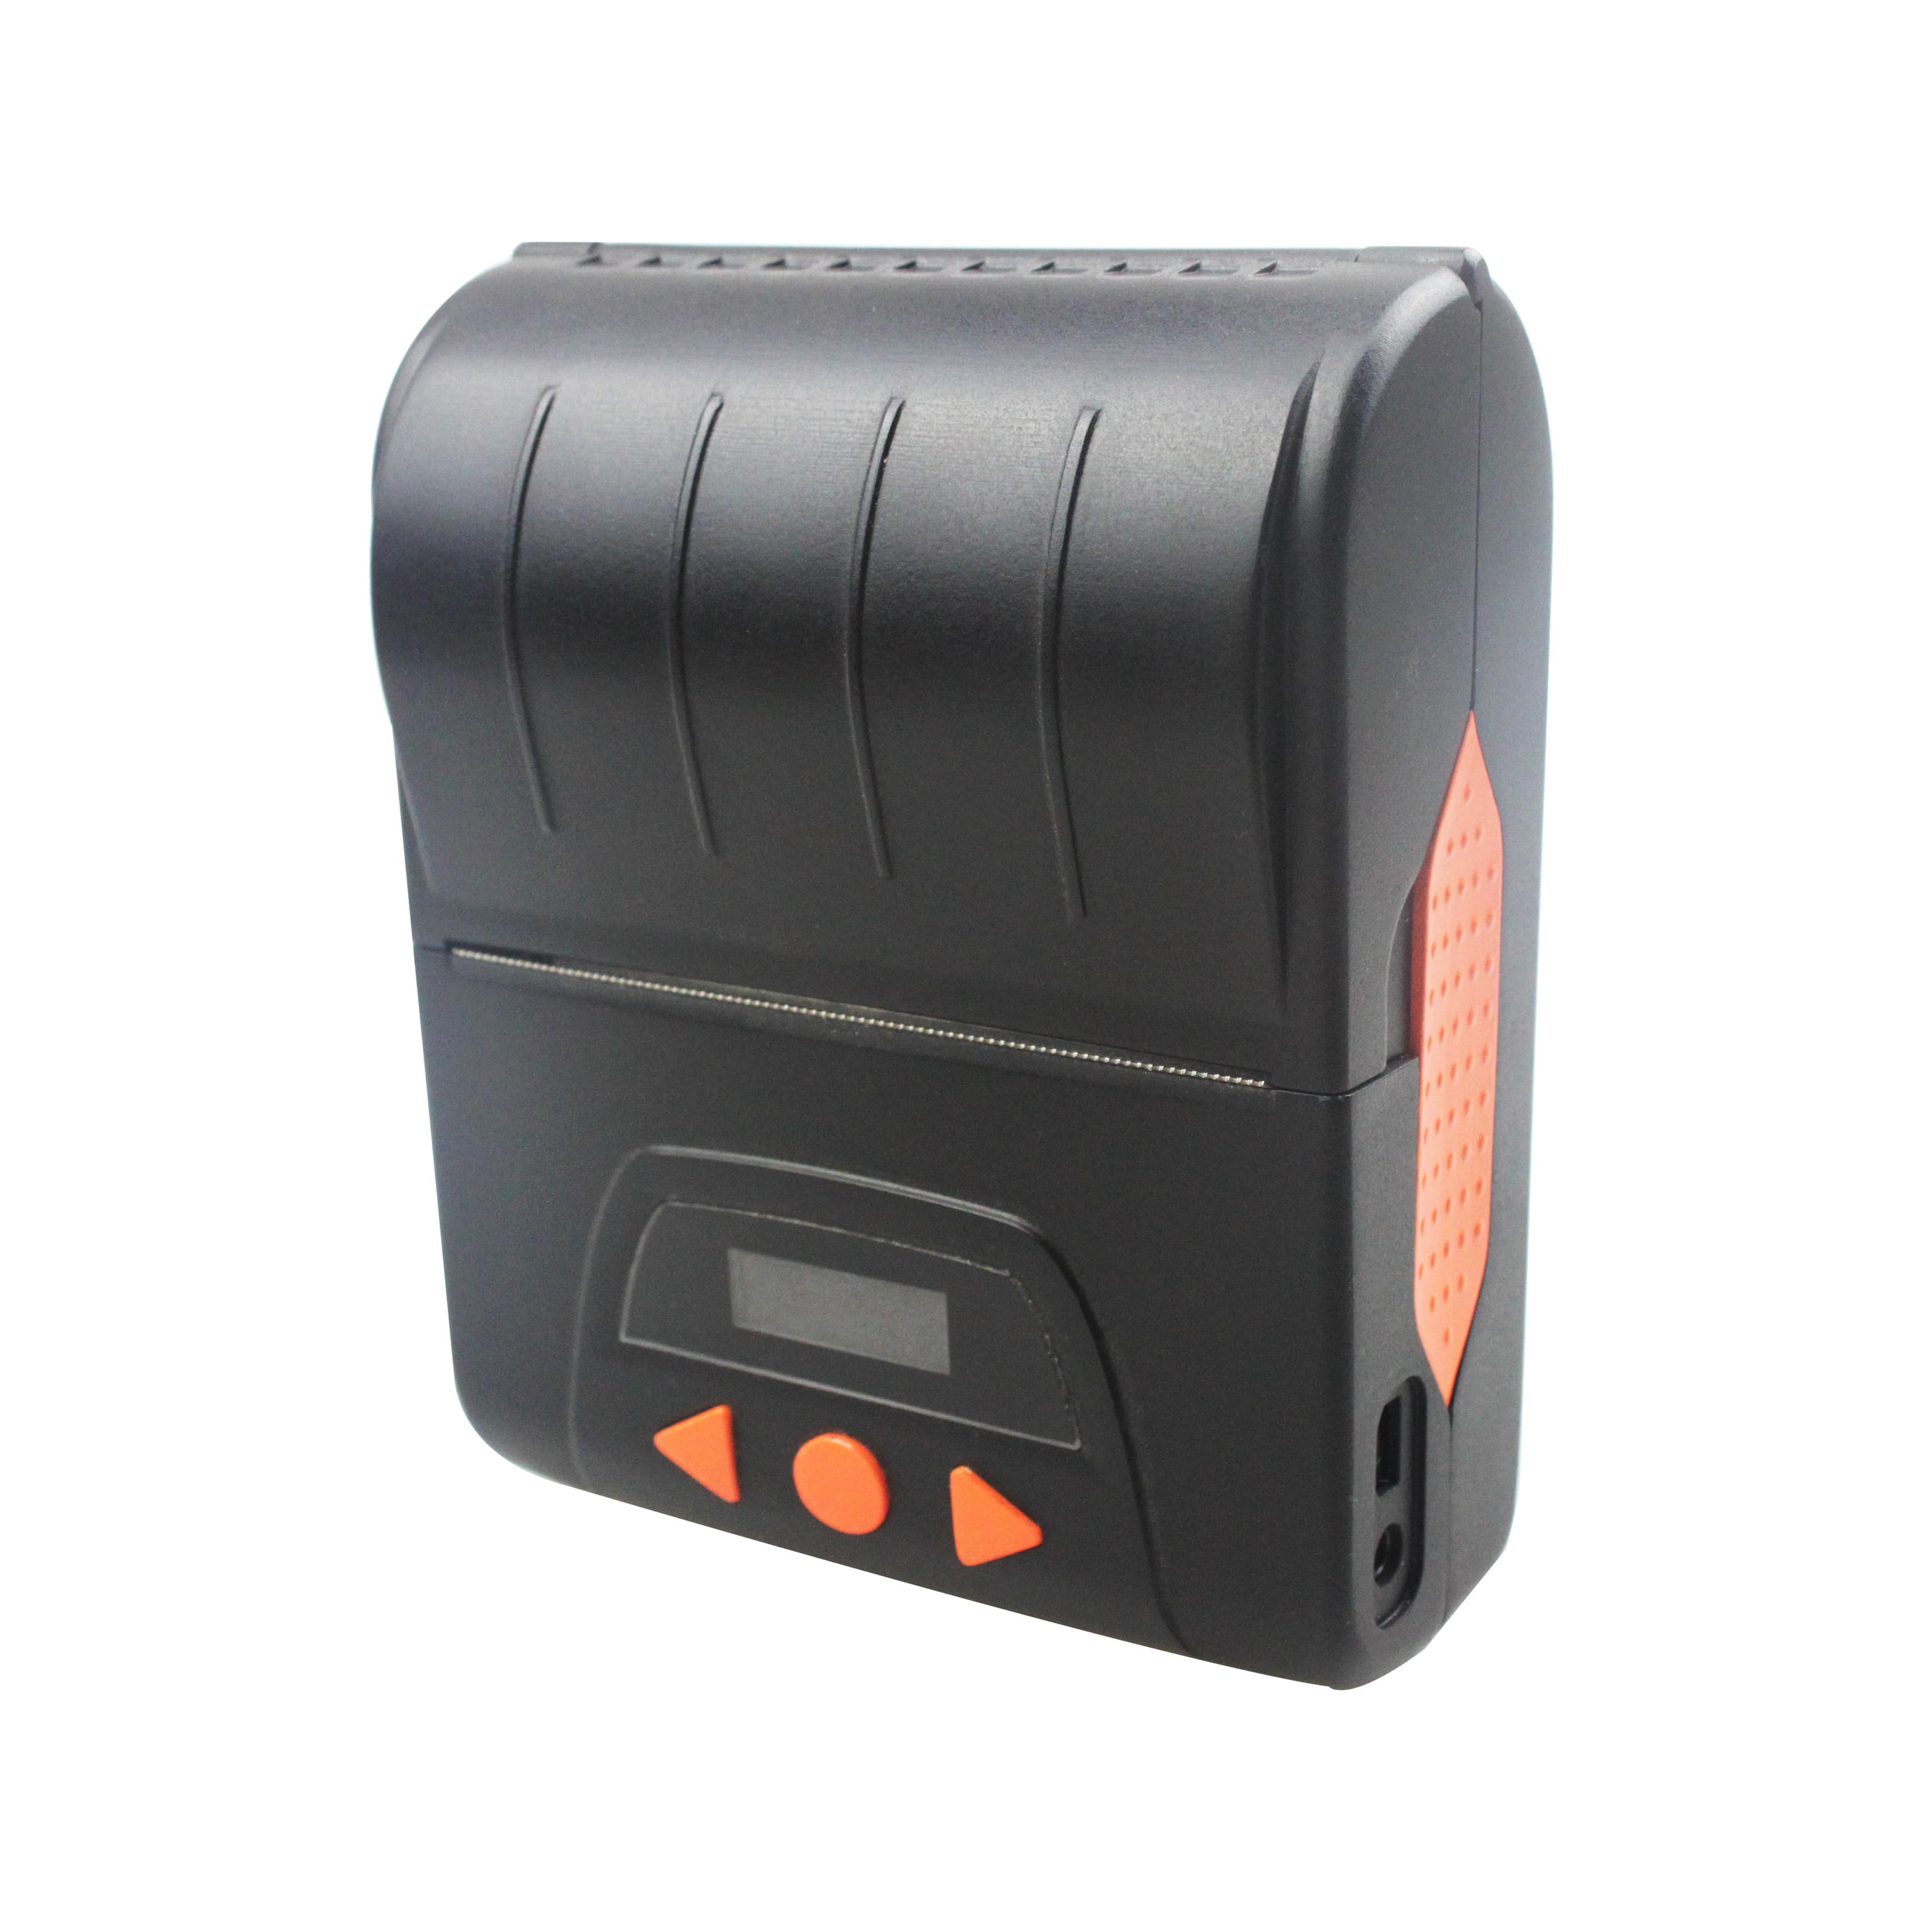 Cashino KMP-III 80mm bluetooth free SDK mini stampante portatile portatile per ricevute
